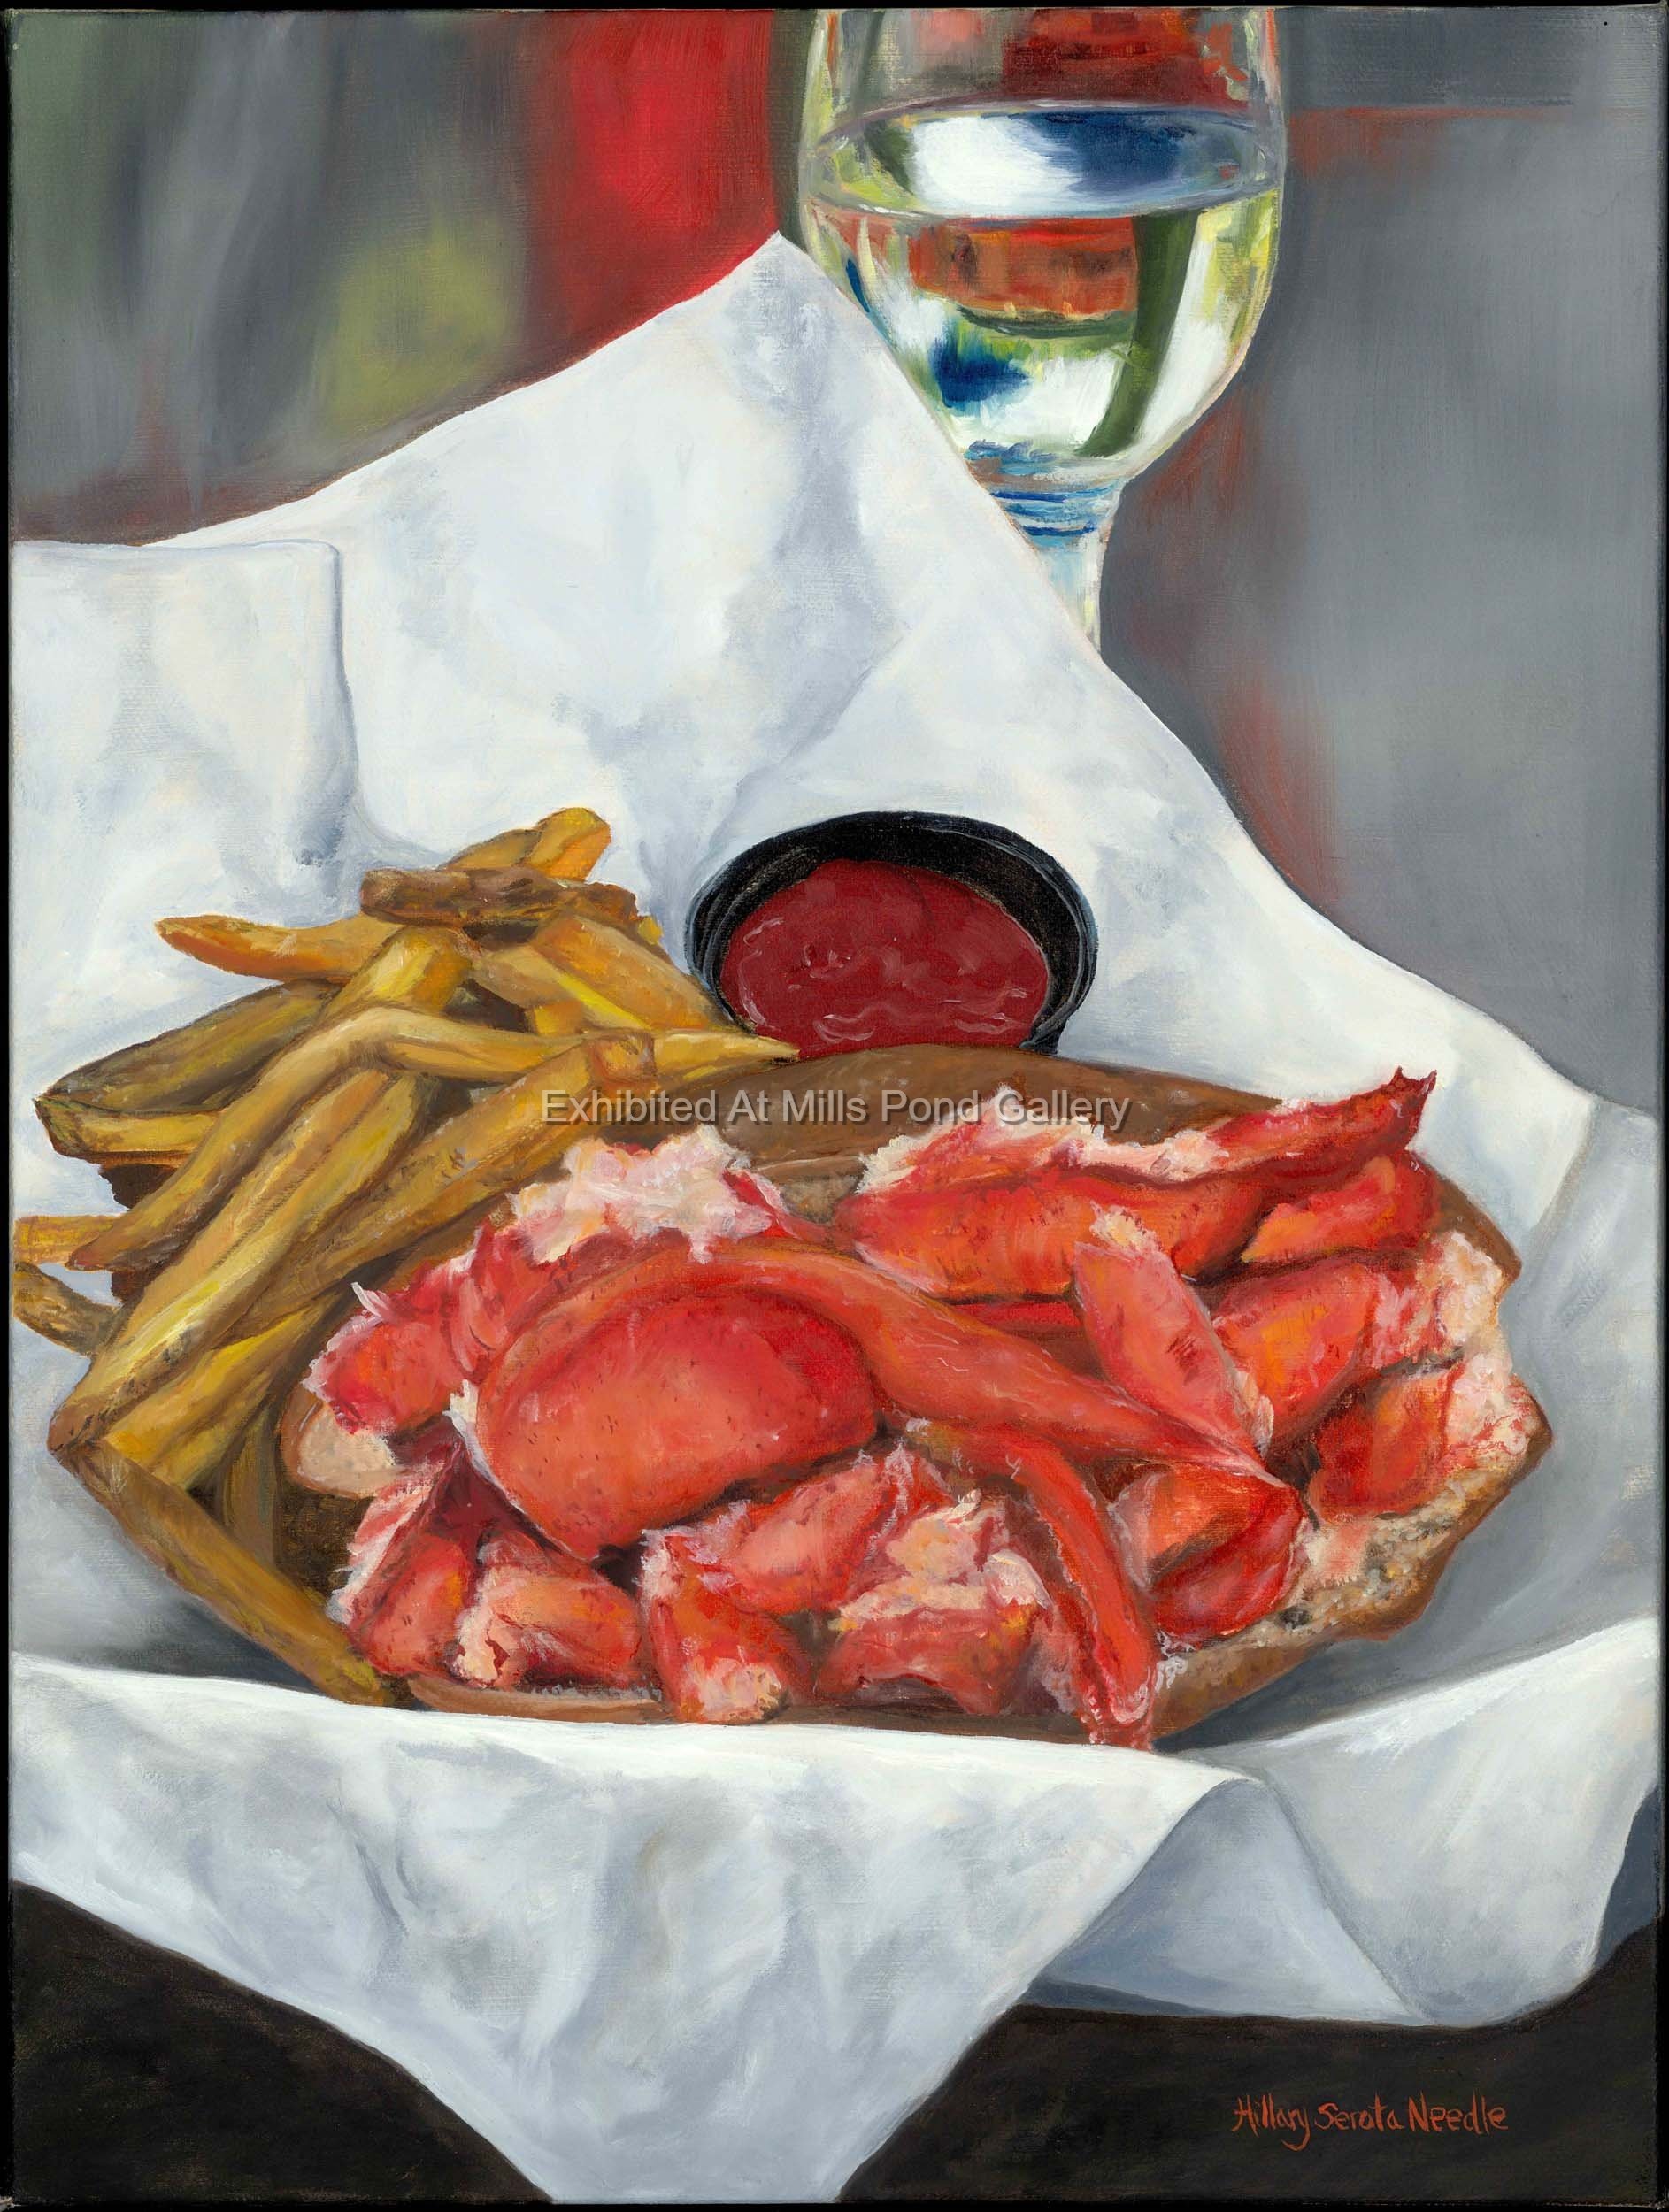 Hillary Serota Needle-The Lobster Roll-Oil on canvas